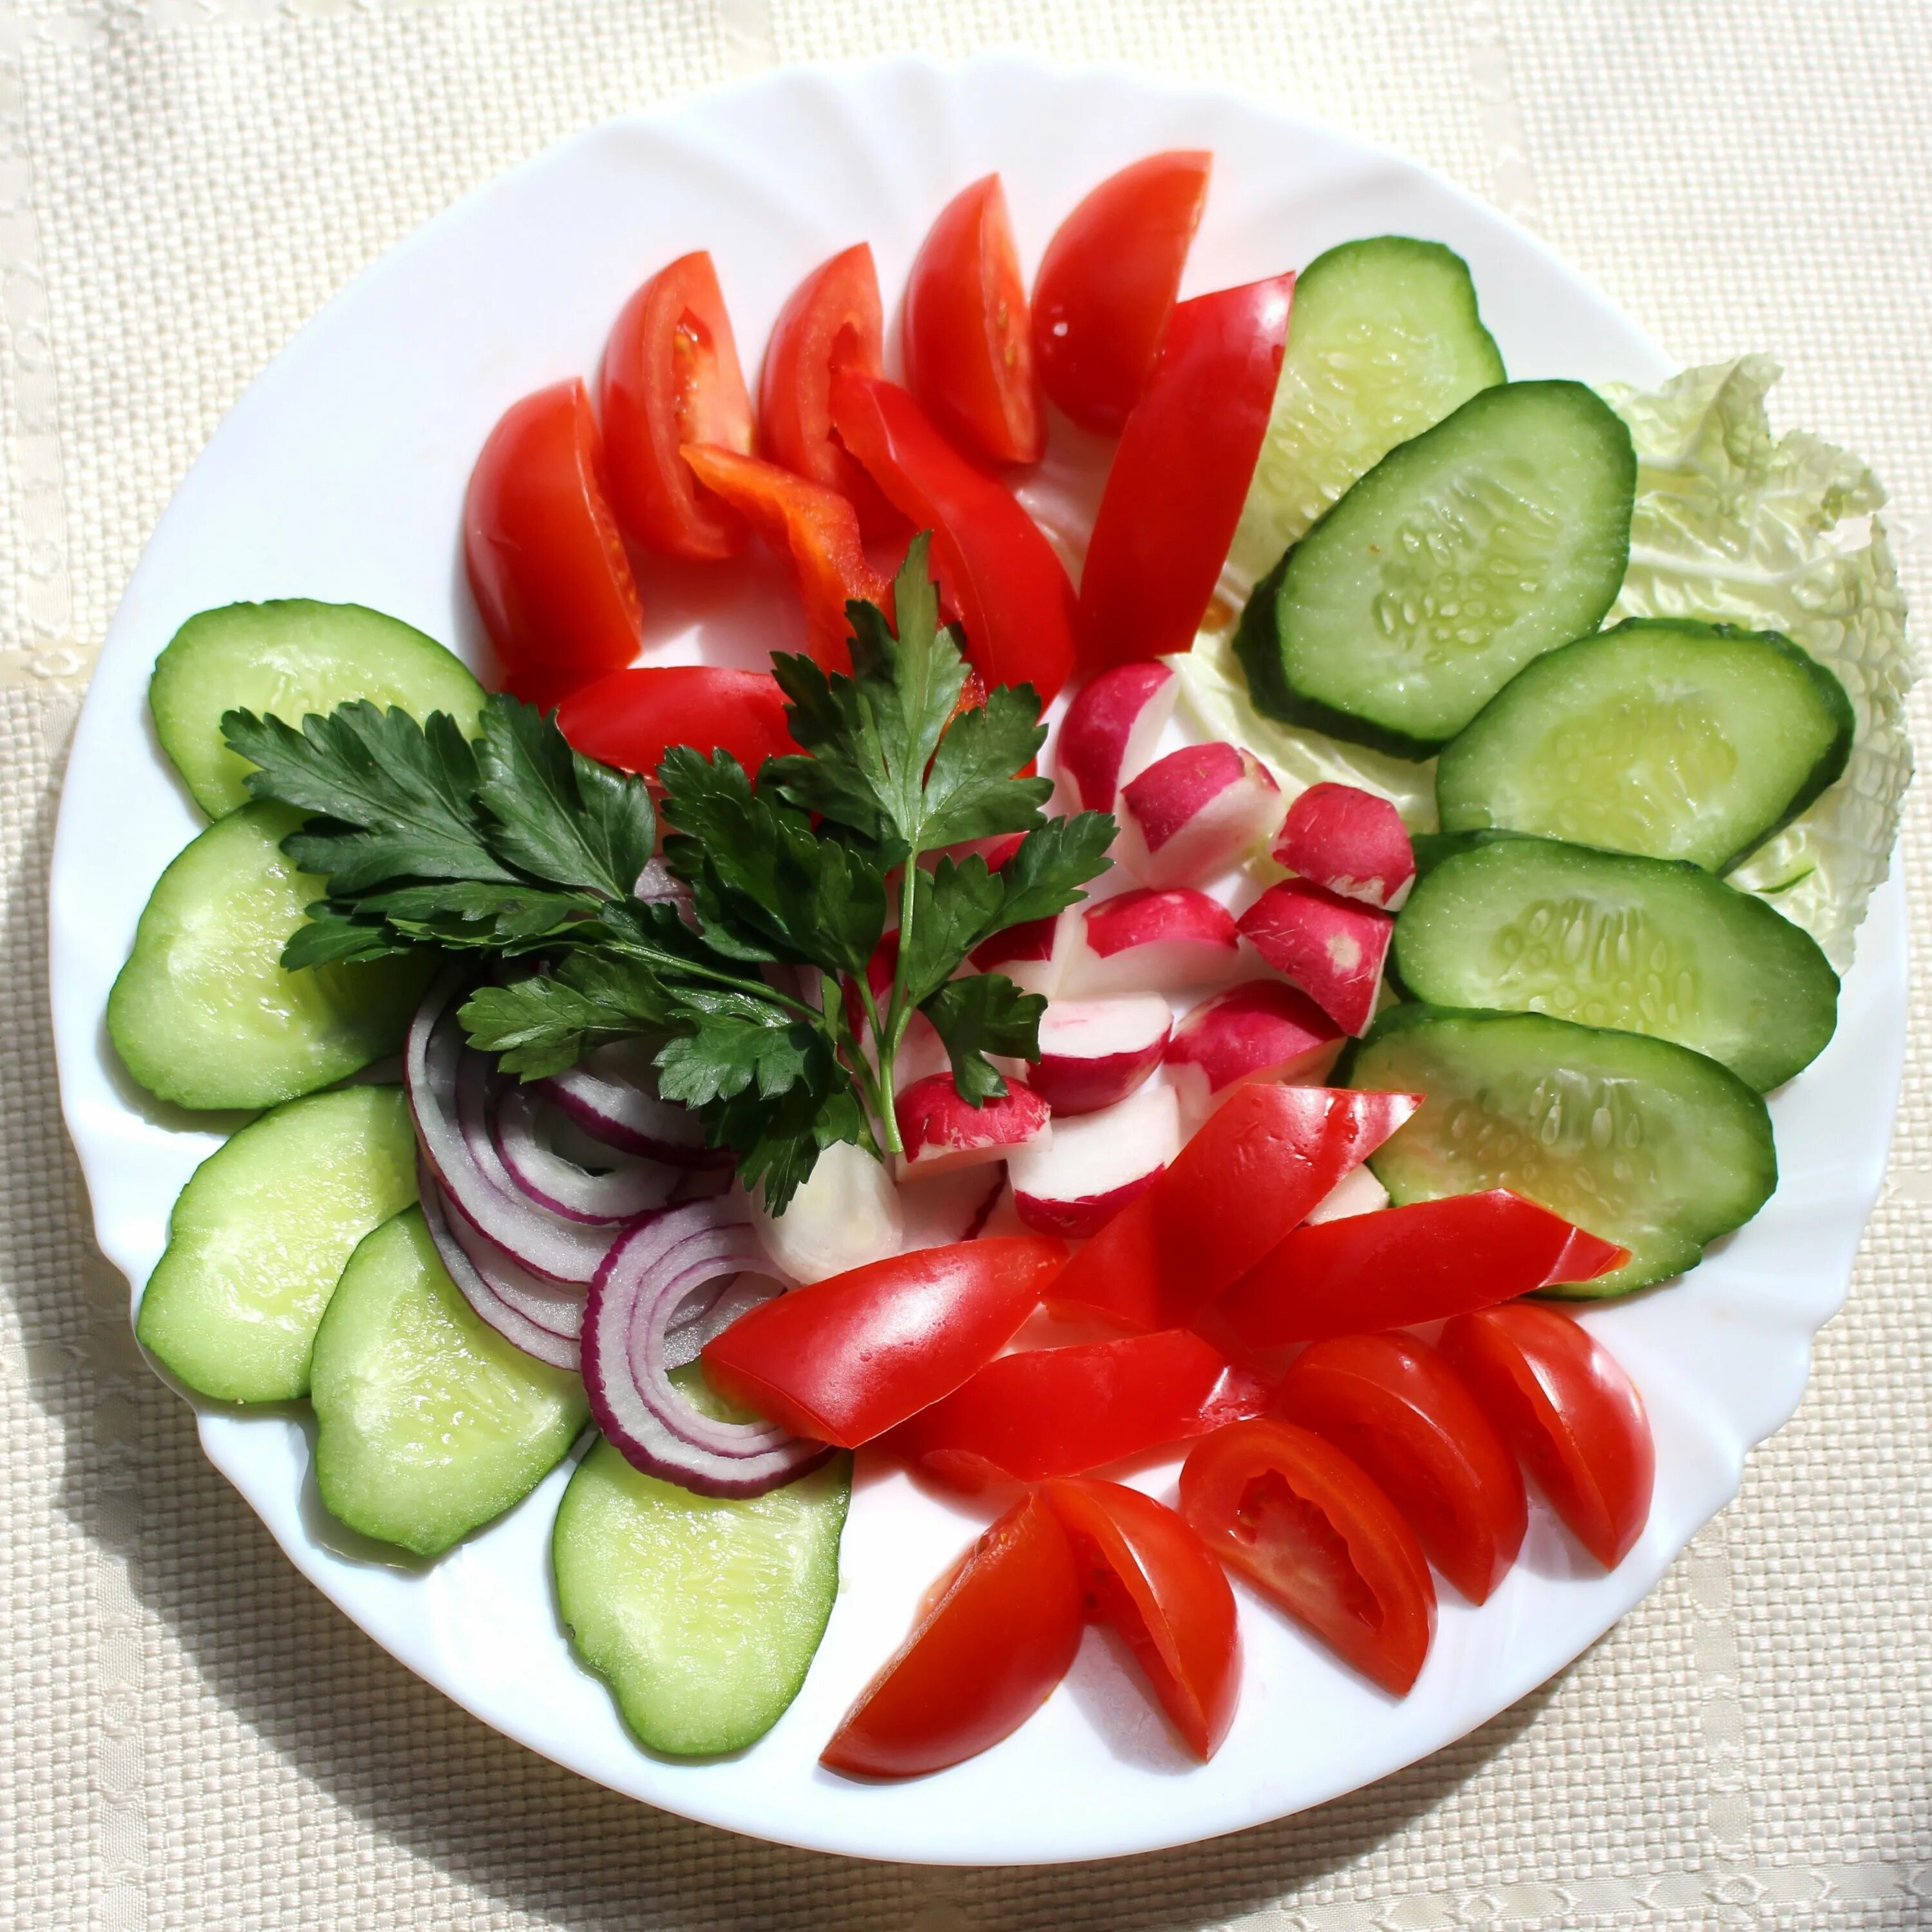 Нарезка огурца на стол. Овощная нарезка. Красивая овощная нарезка. Свежие овощи на тарелке. Салат овощная нарезка.